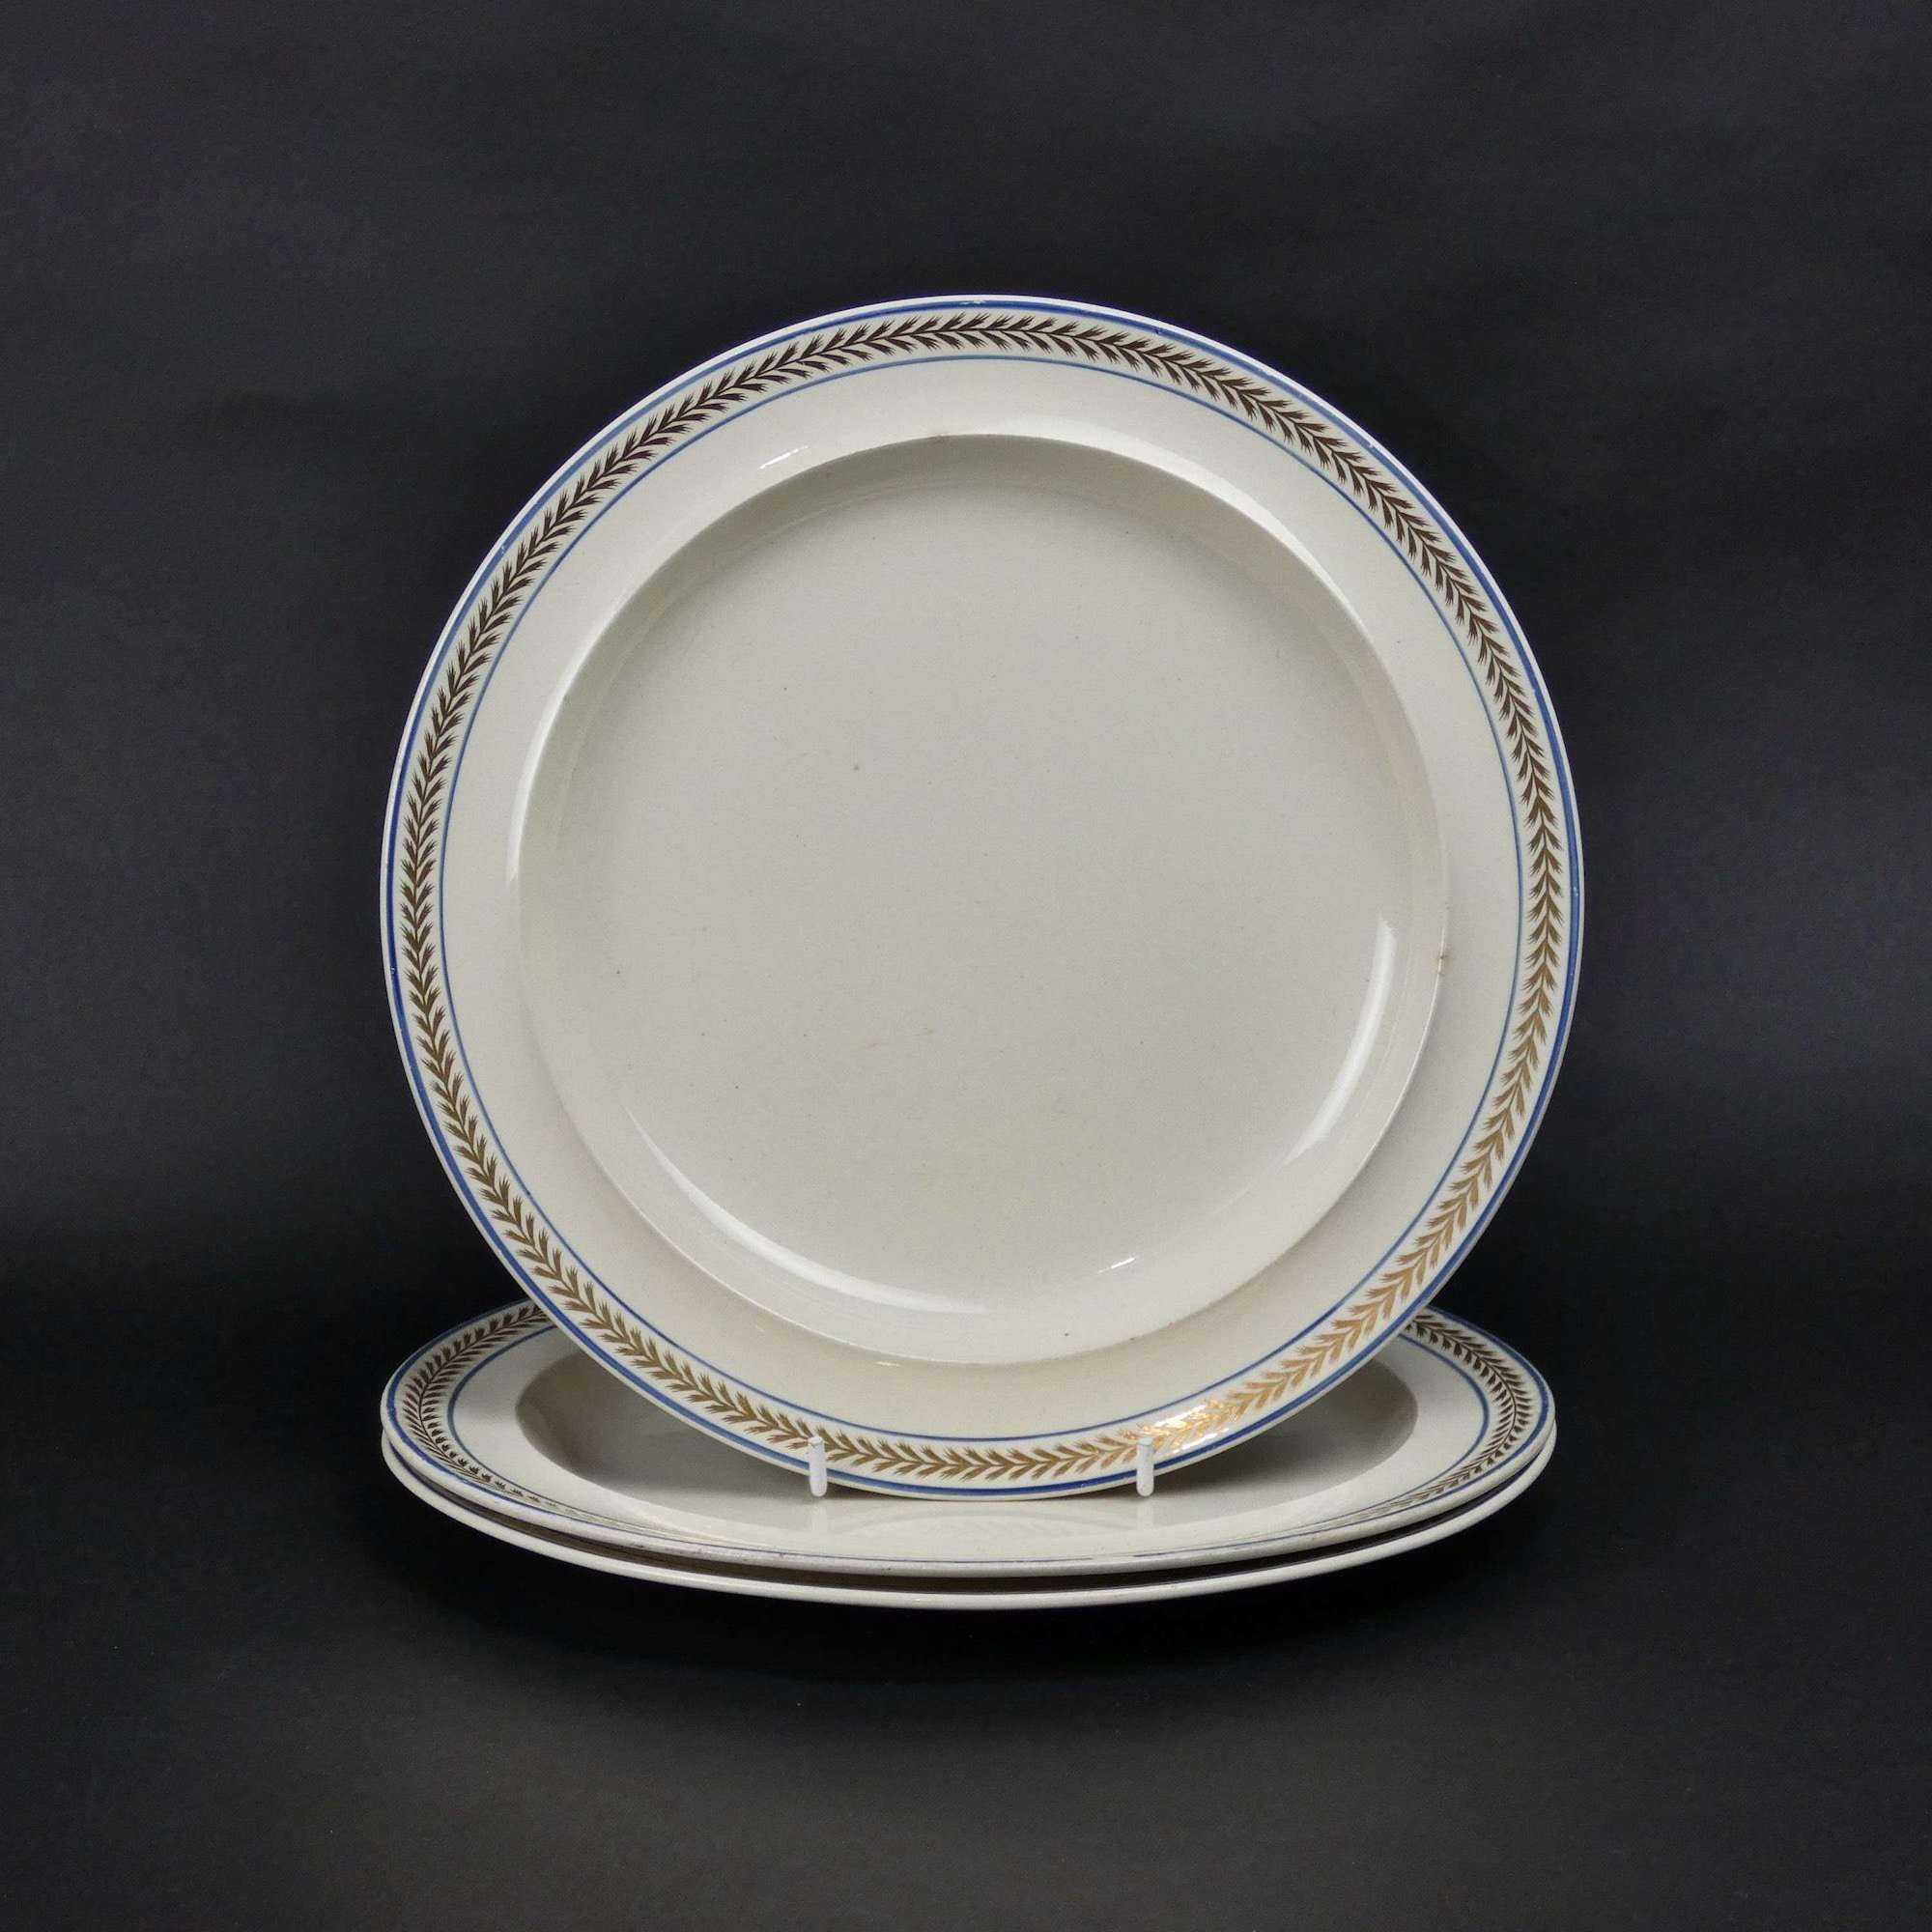 3 Wedgwood creamware plates